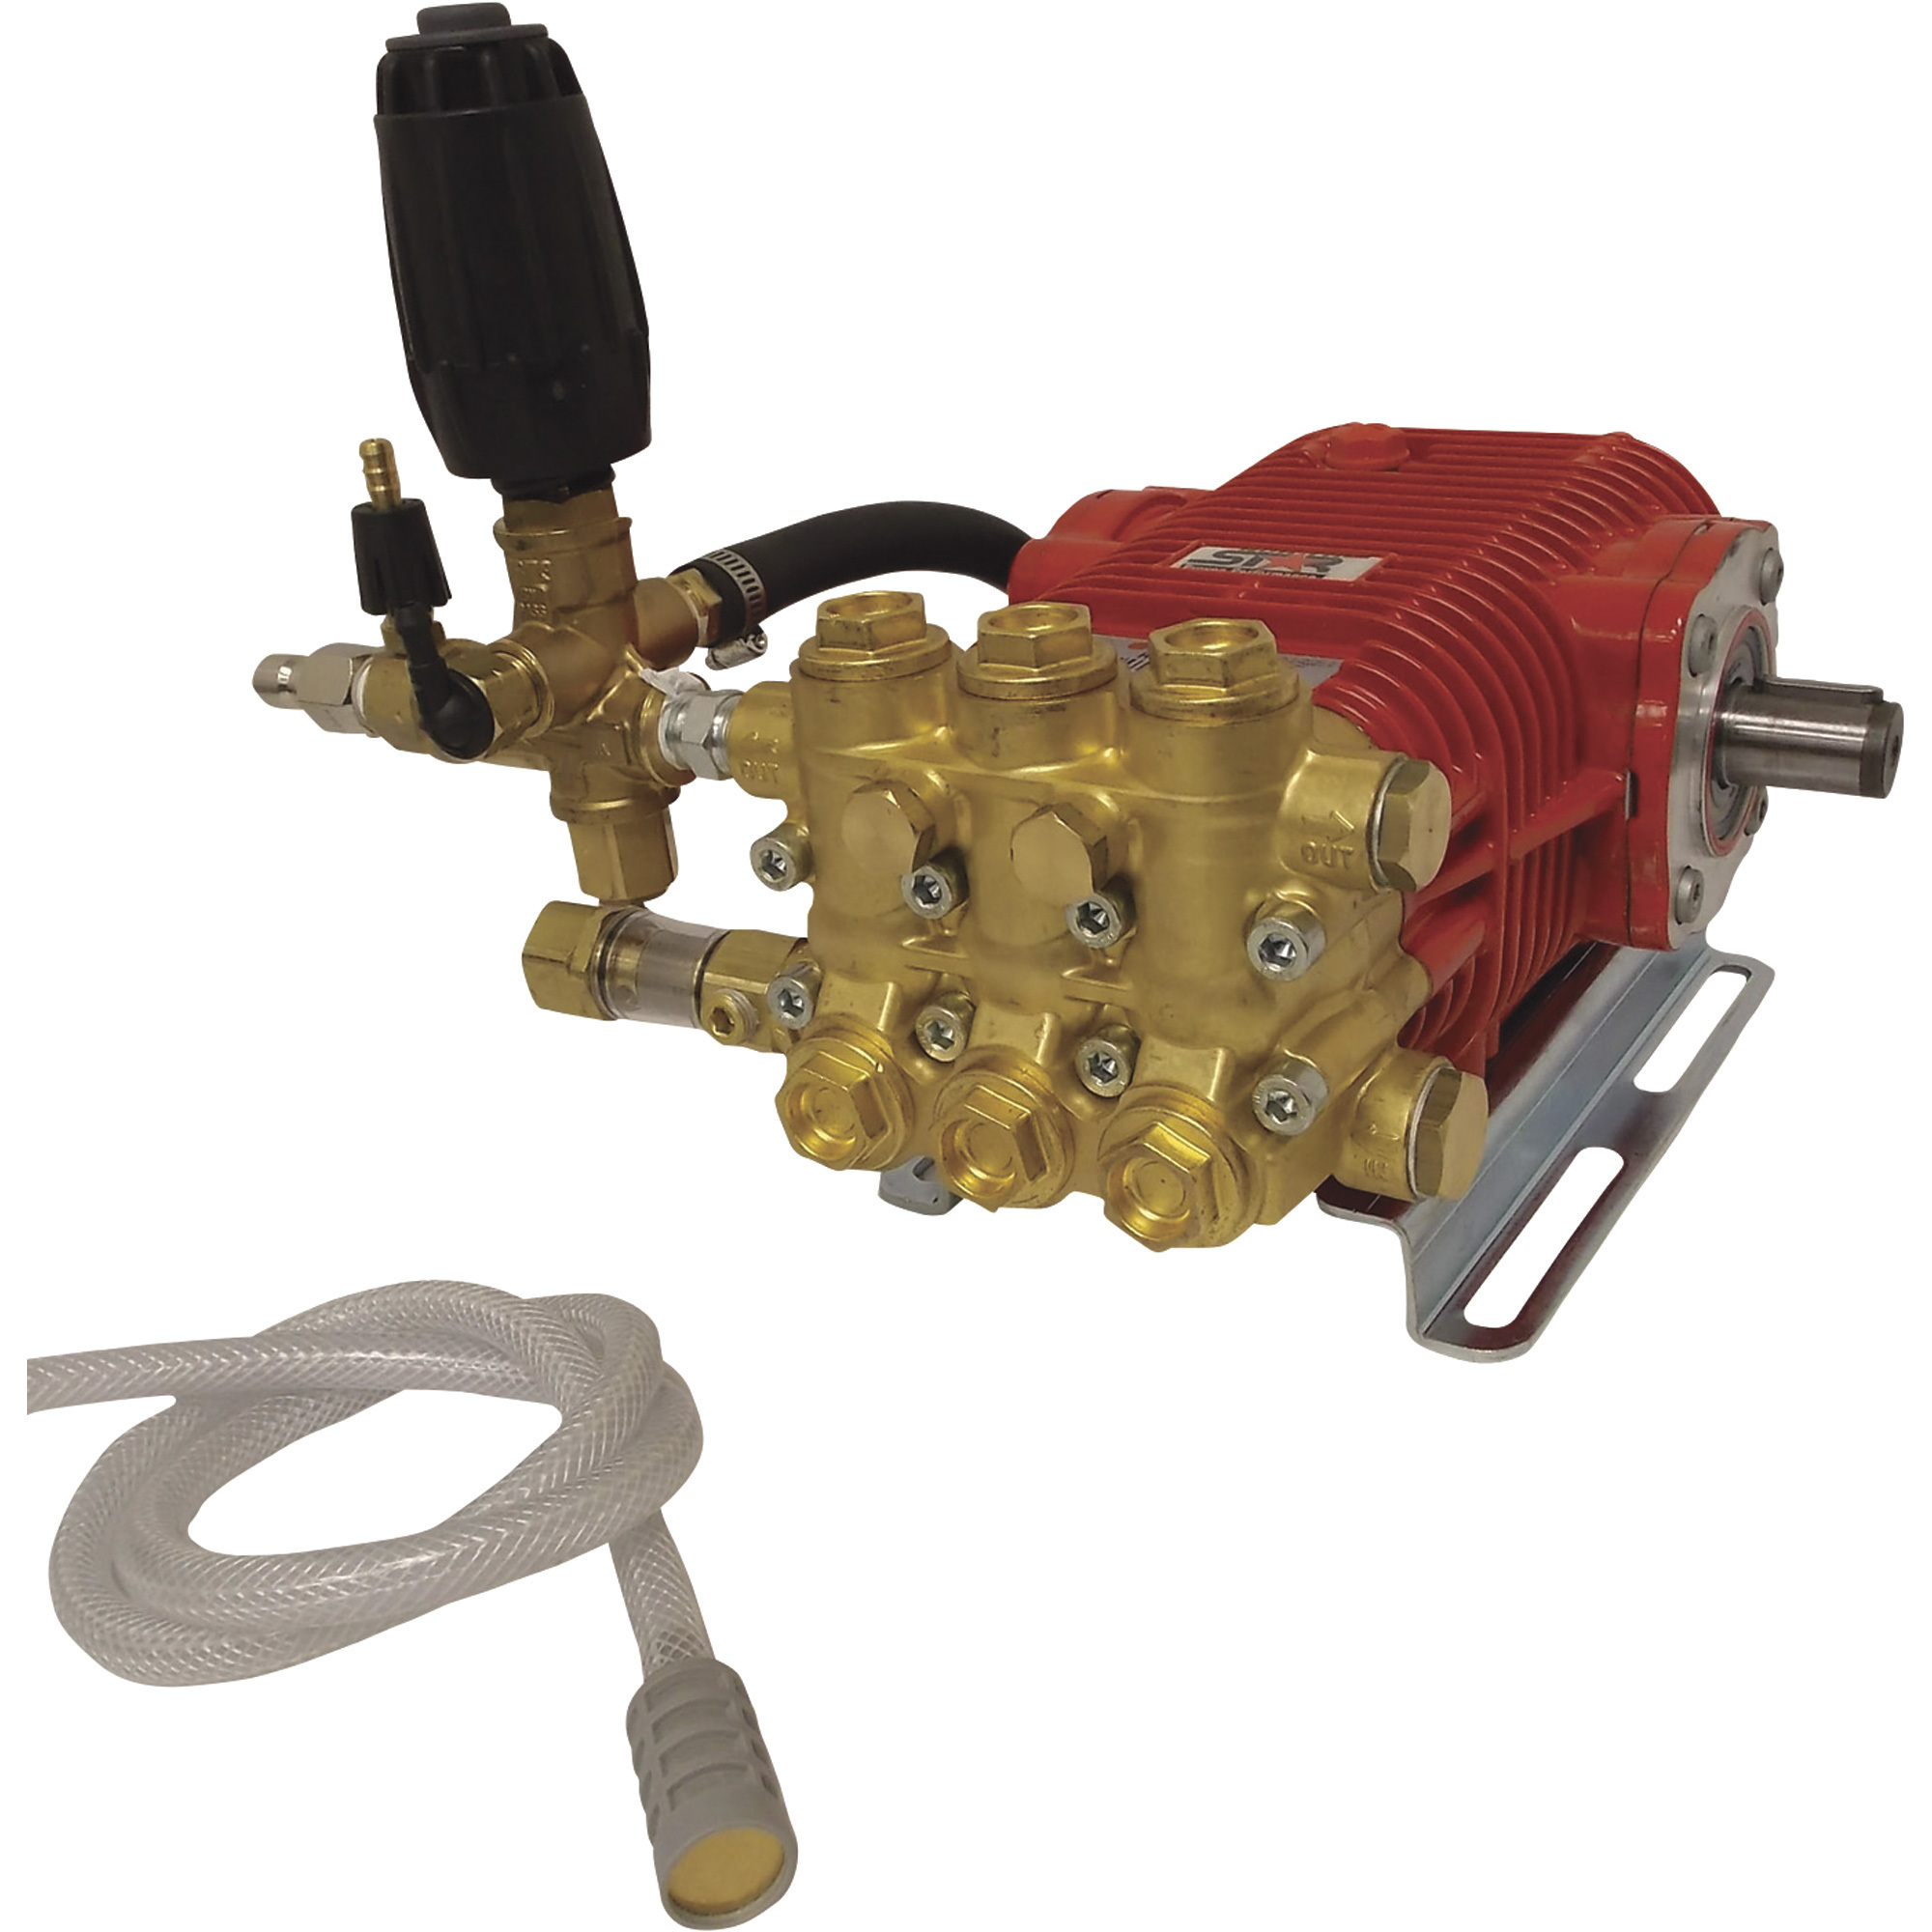 NorthStar Easy Bolt-On Pressure Washer Pump, 4000 PSI, 4.5 GPM, Belt Drive, Model A1572081